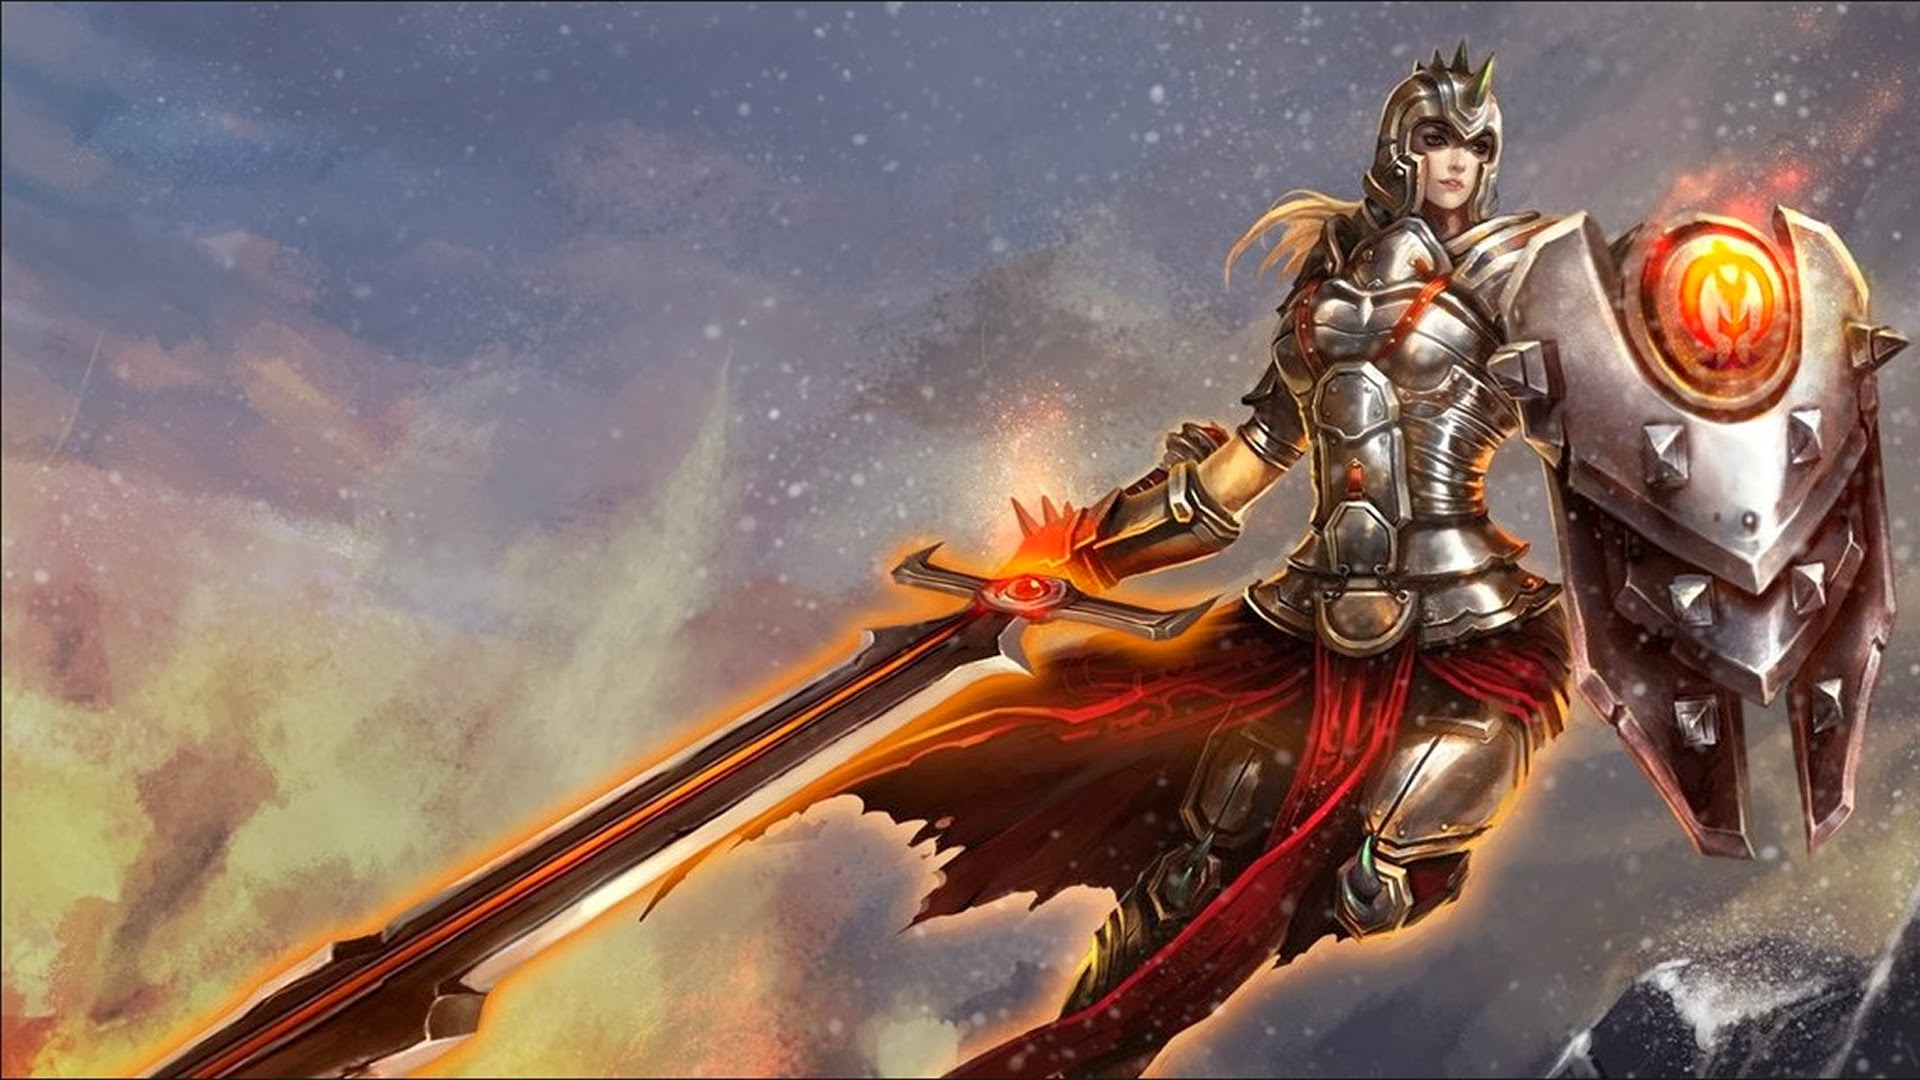 leona armor sword league of legends hd wallpaper lol girl champion